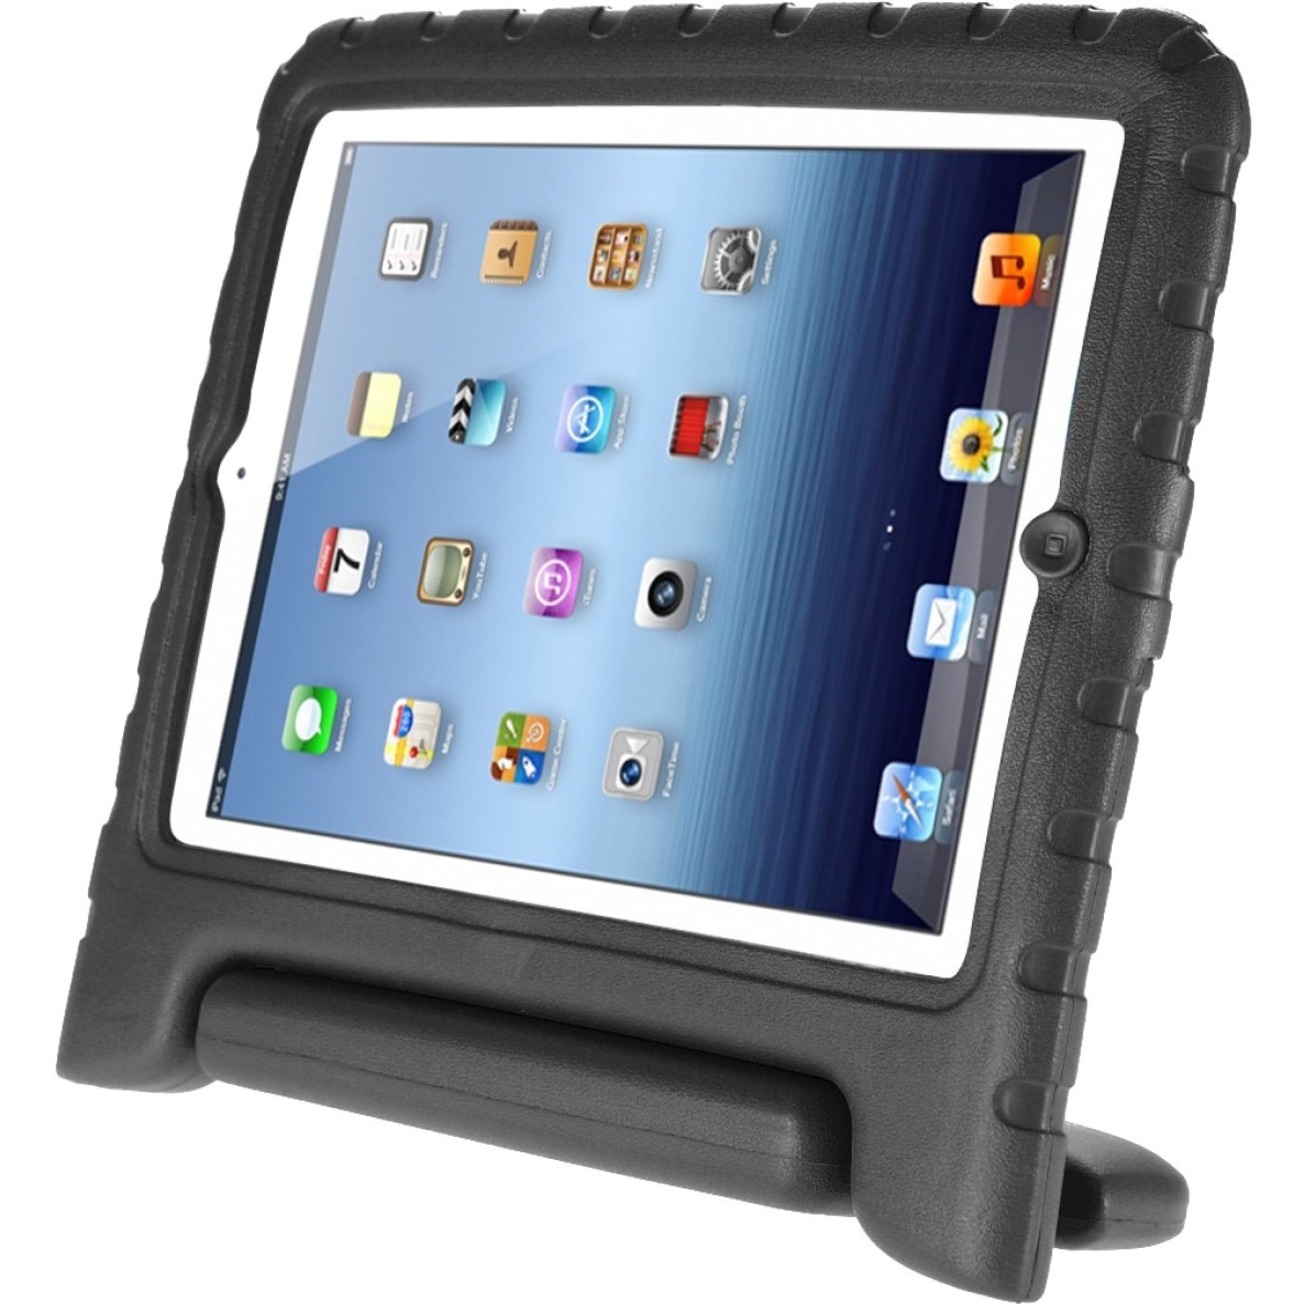 i-Blason Carrying Case Apple iPad 2, iPad (3rd Generation), iPad (4th Generation) Tablet, Black - image 1 of 5